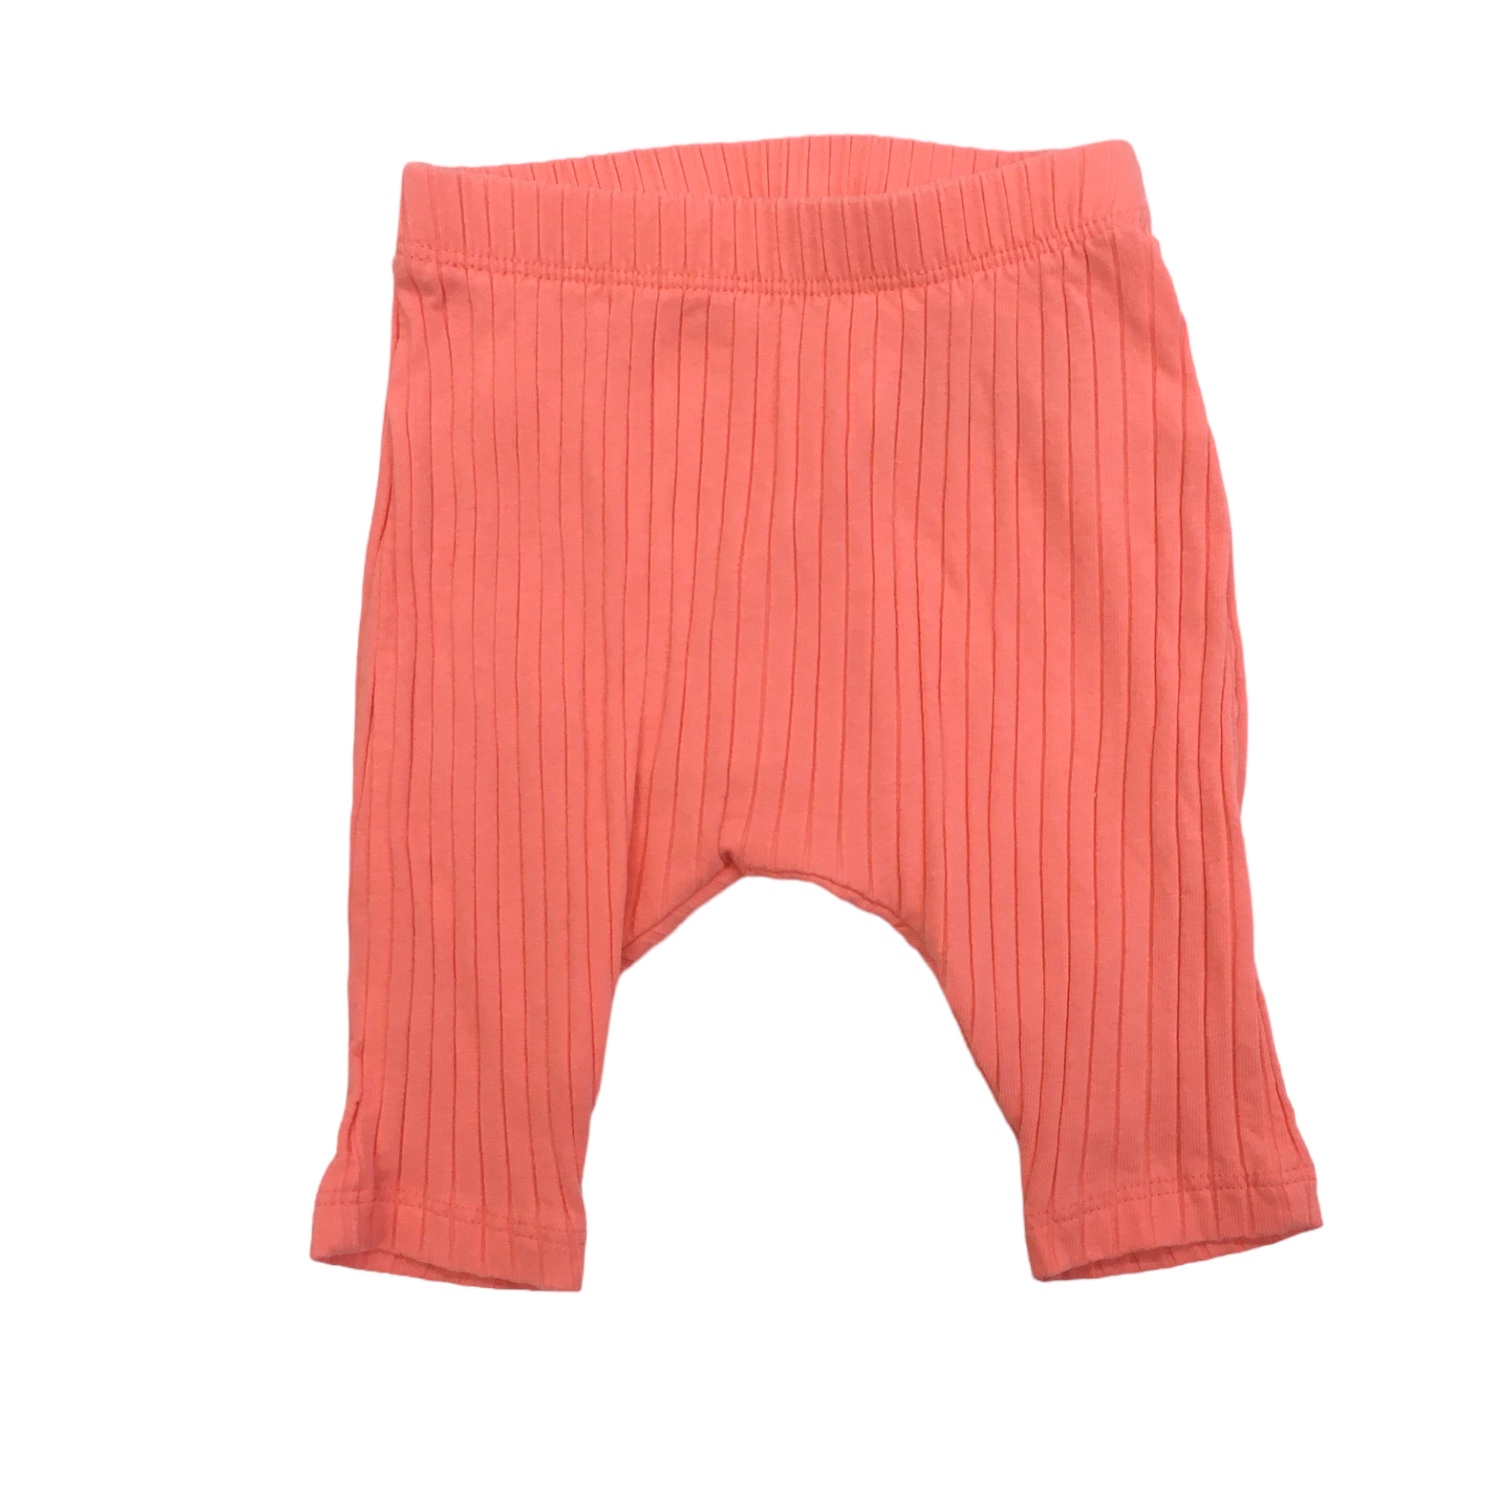 Vintage Kmart Girls Thermal Underwear Pants Shirt Size 7-8 Floral Pattern  NEW